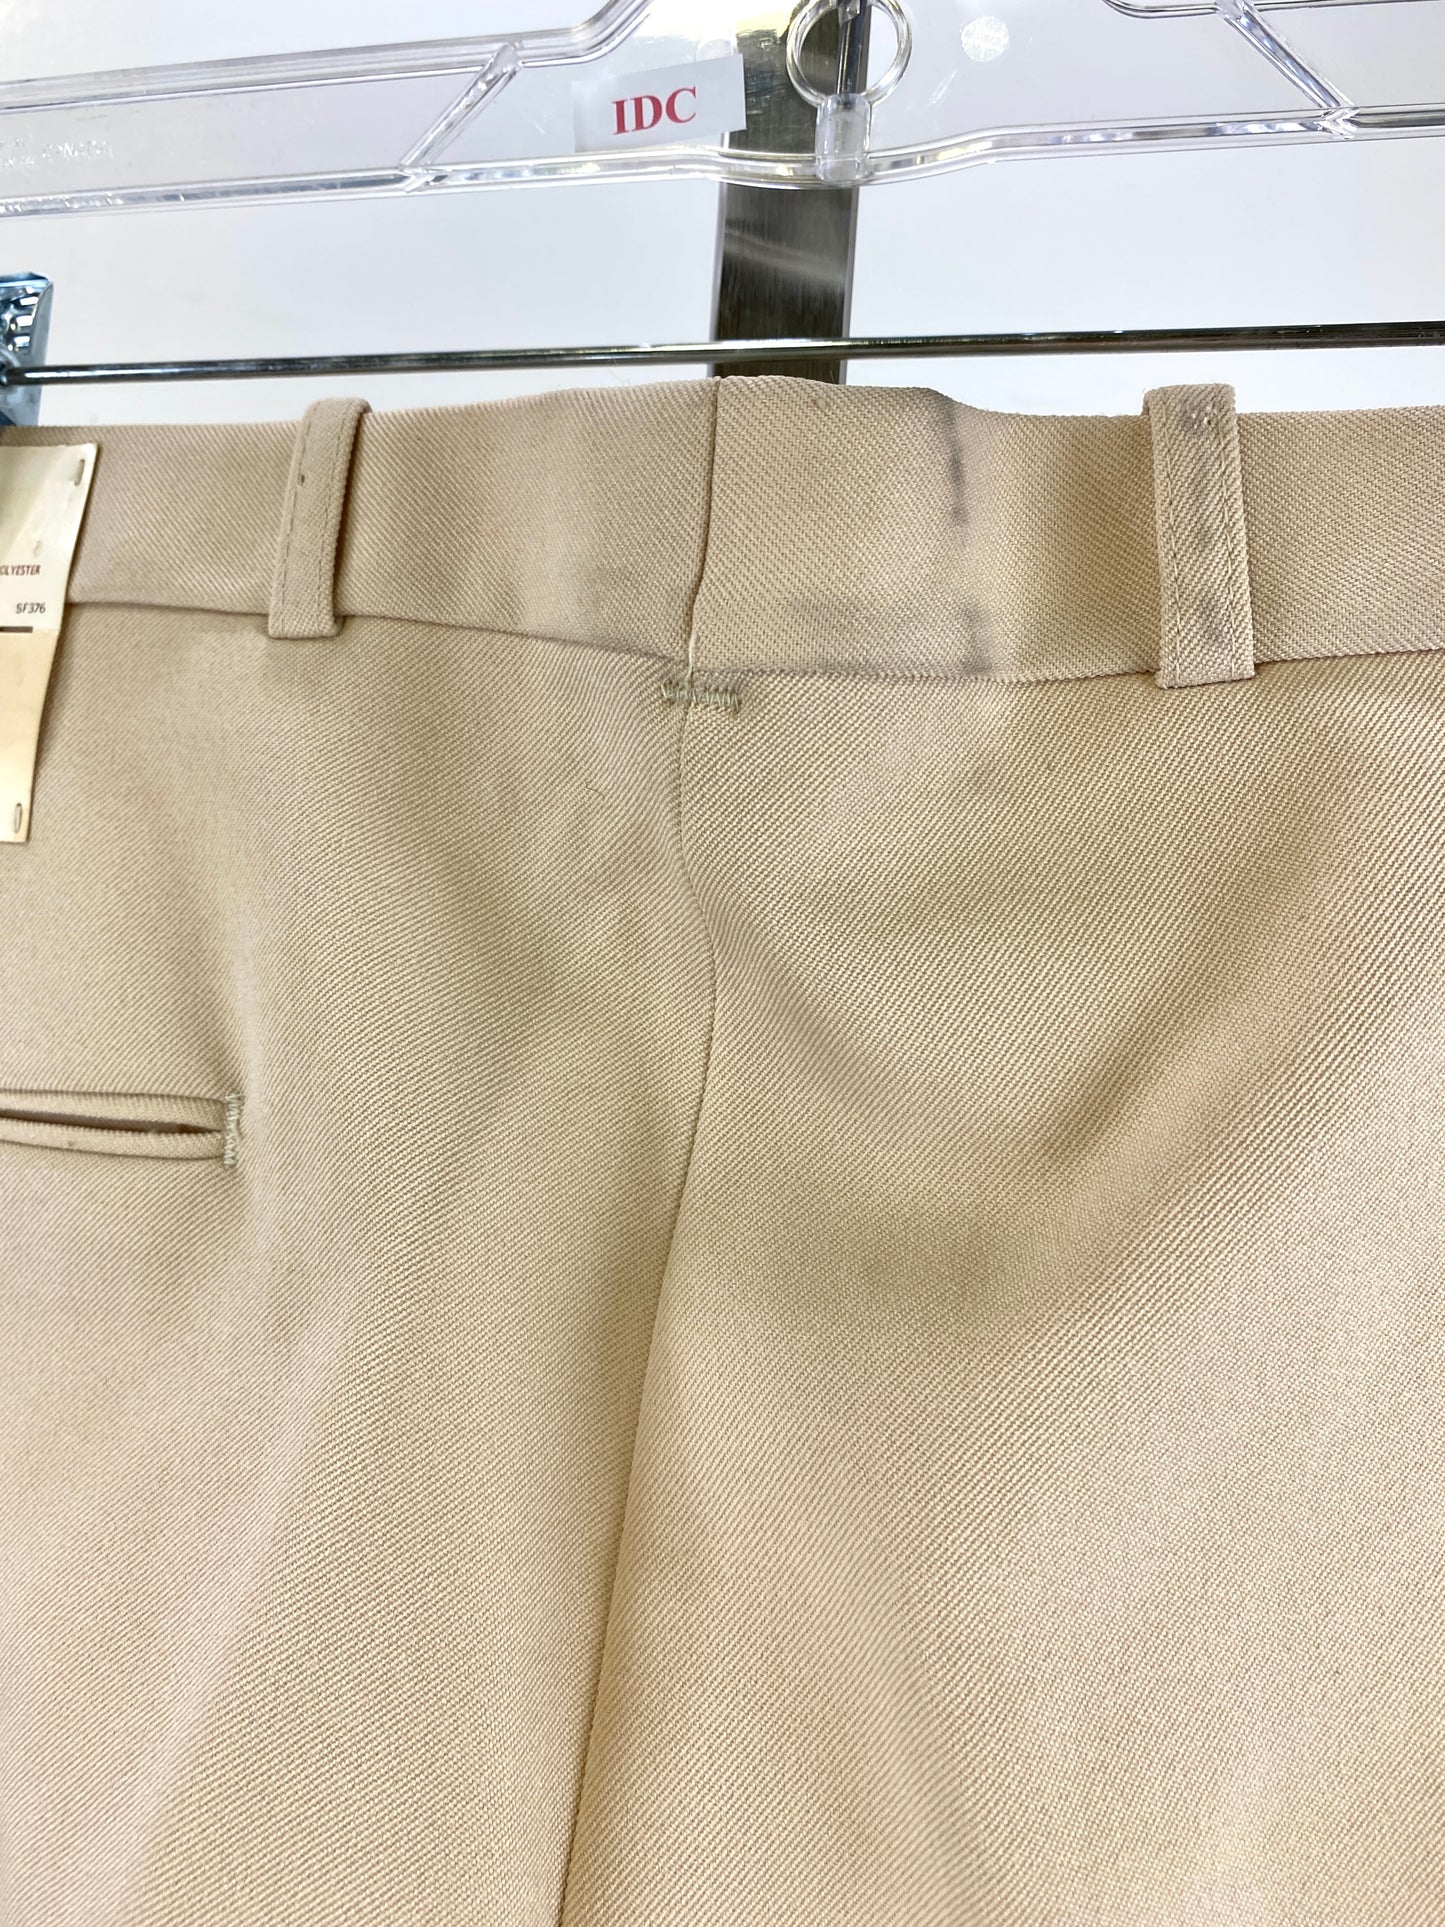 Vintage 1970s Deadstock Flared Levi's Trousers, Men's Beige Slacks, NOS